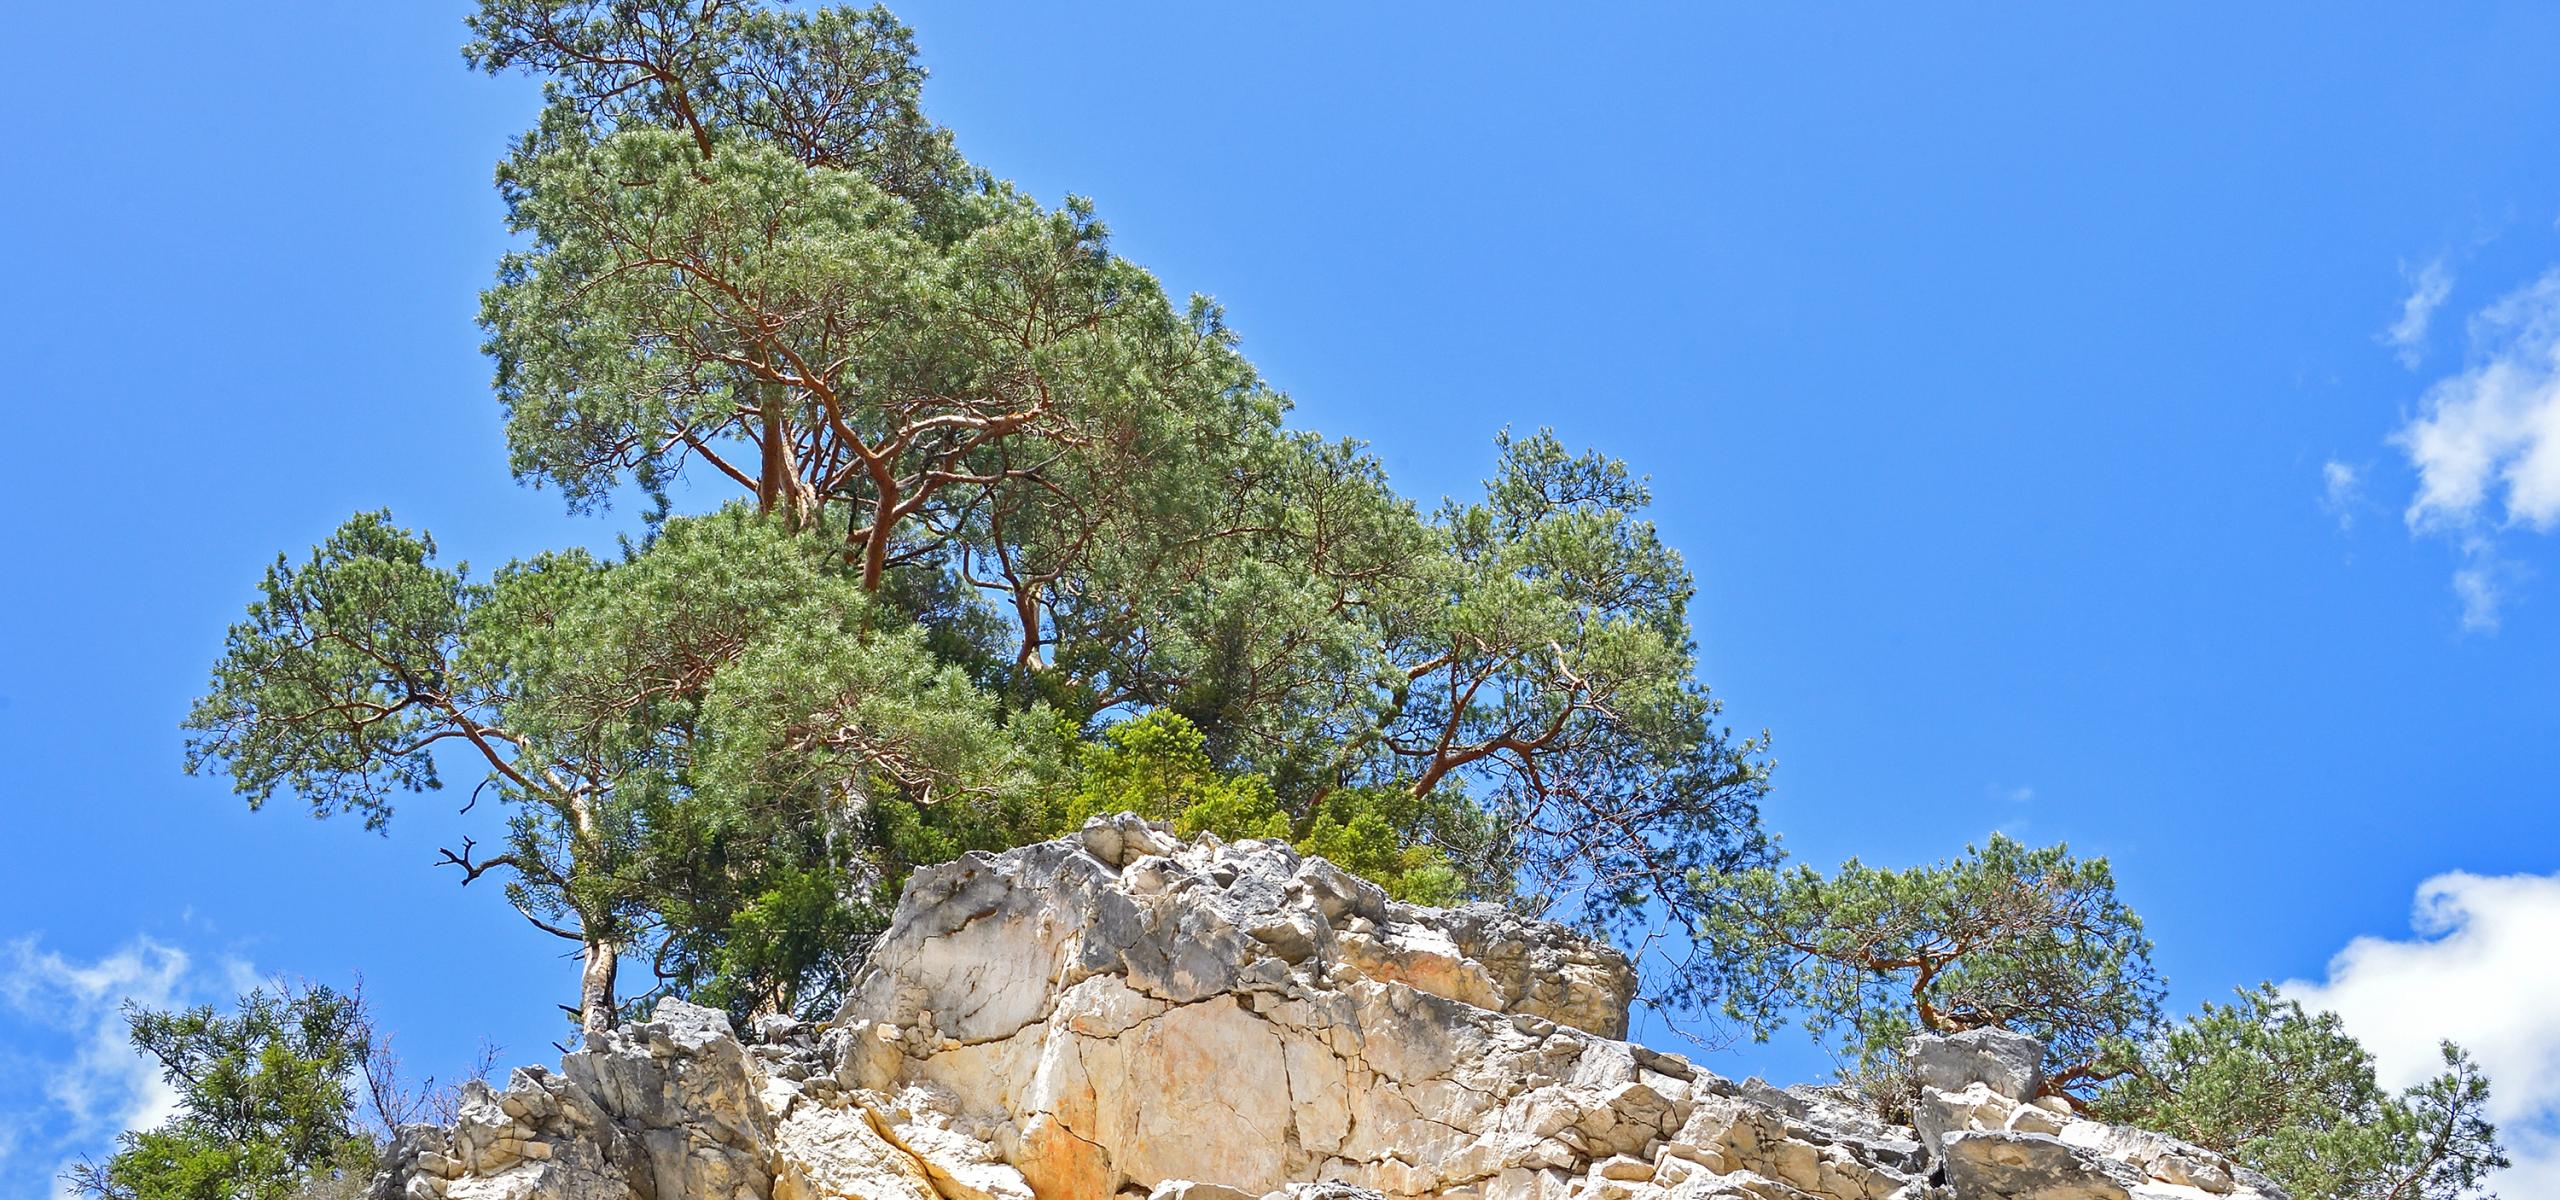 Red pines grow on limestone rock